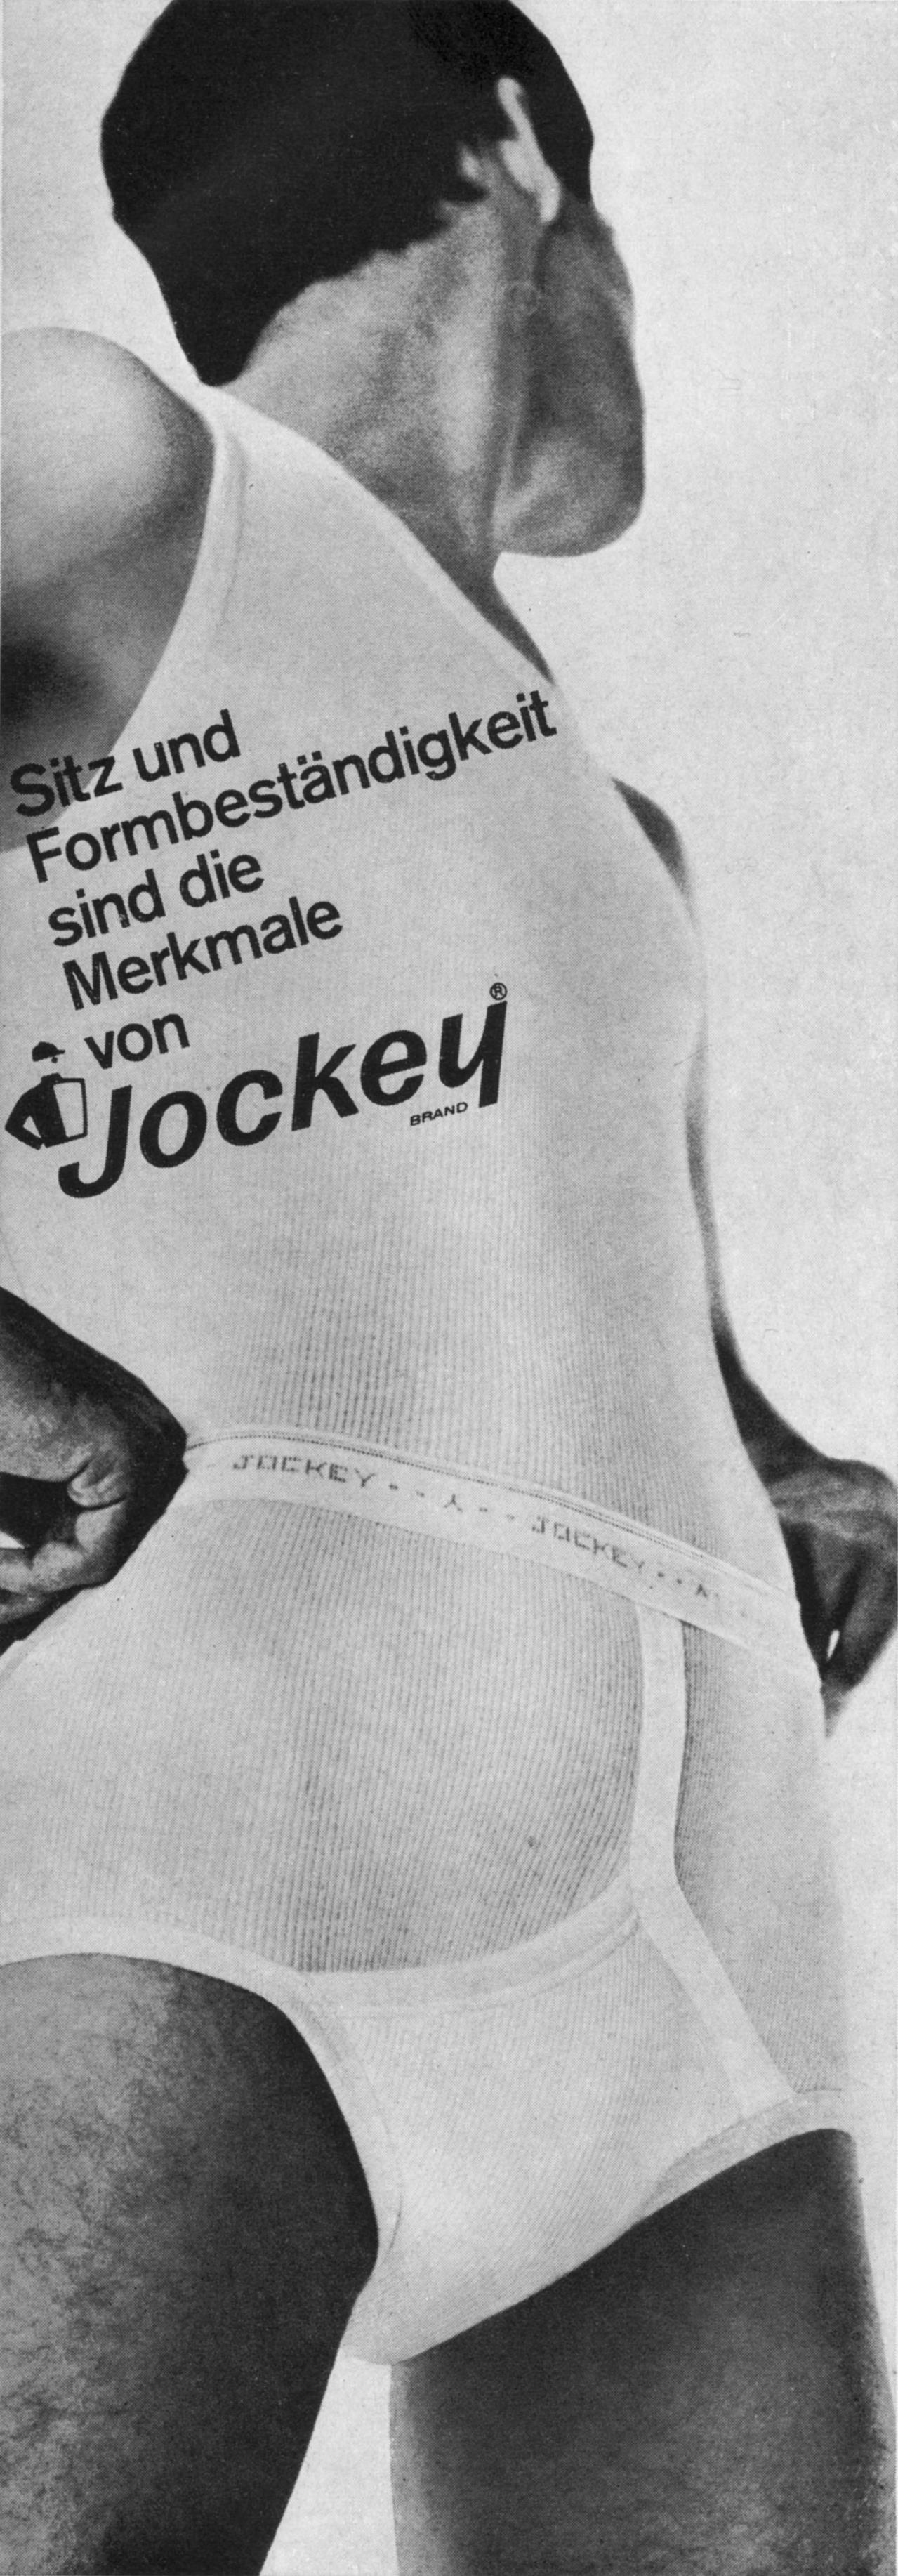 Jockey 1966 2.jpg